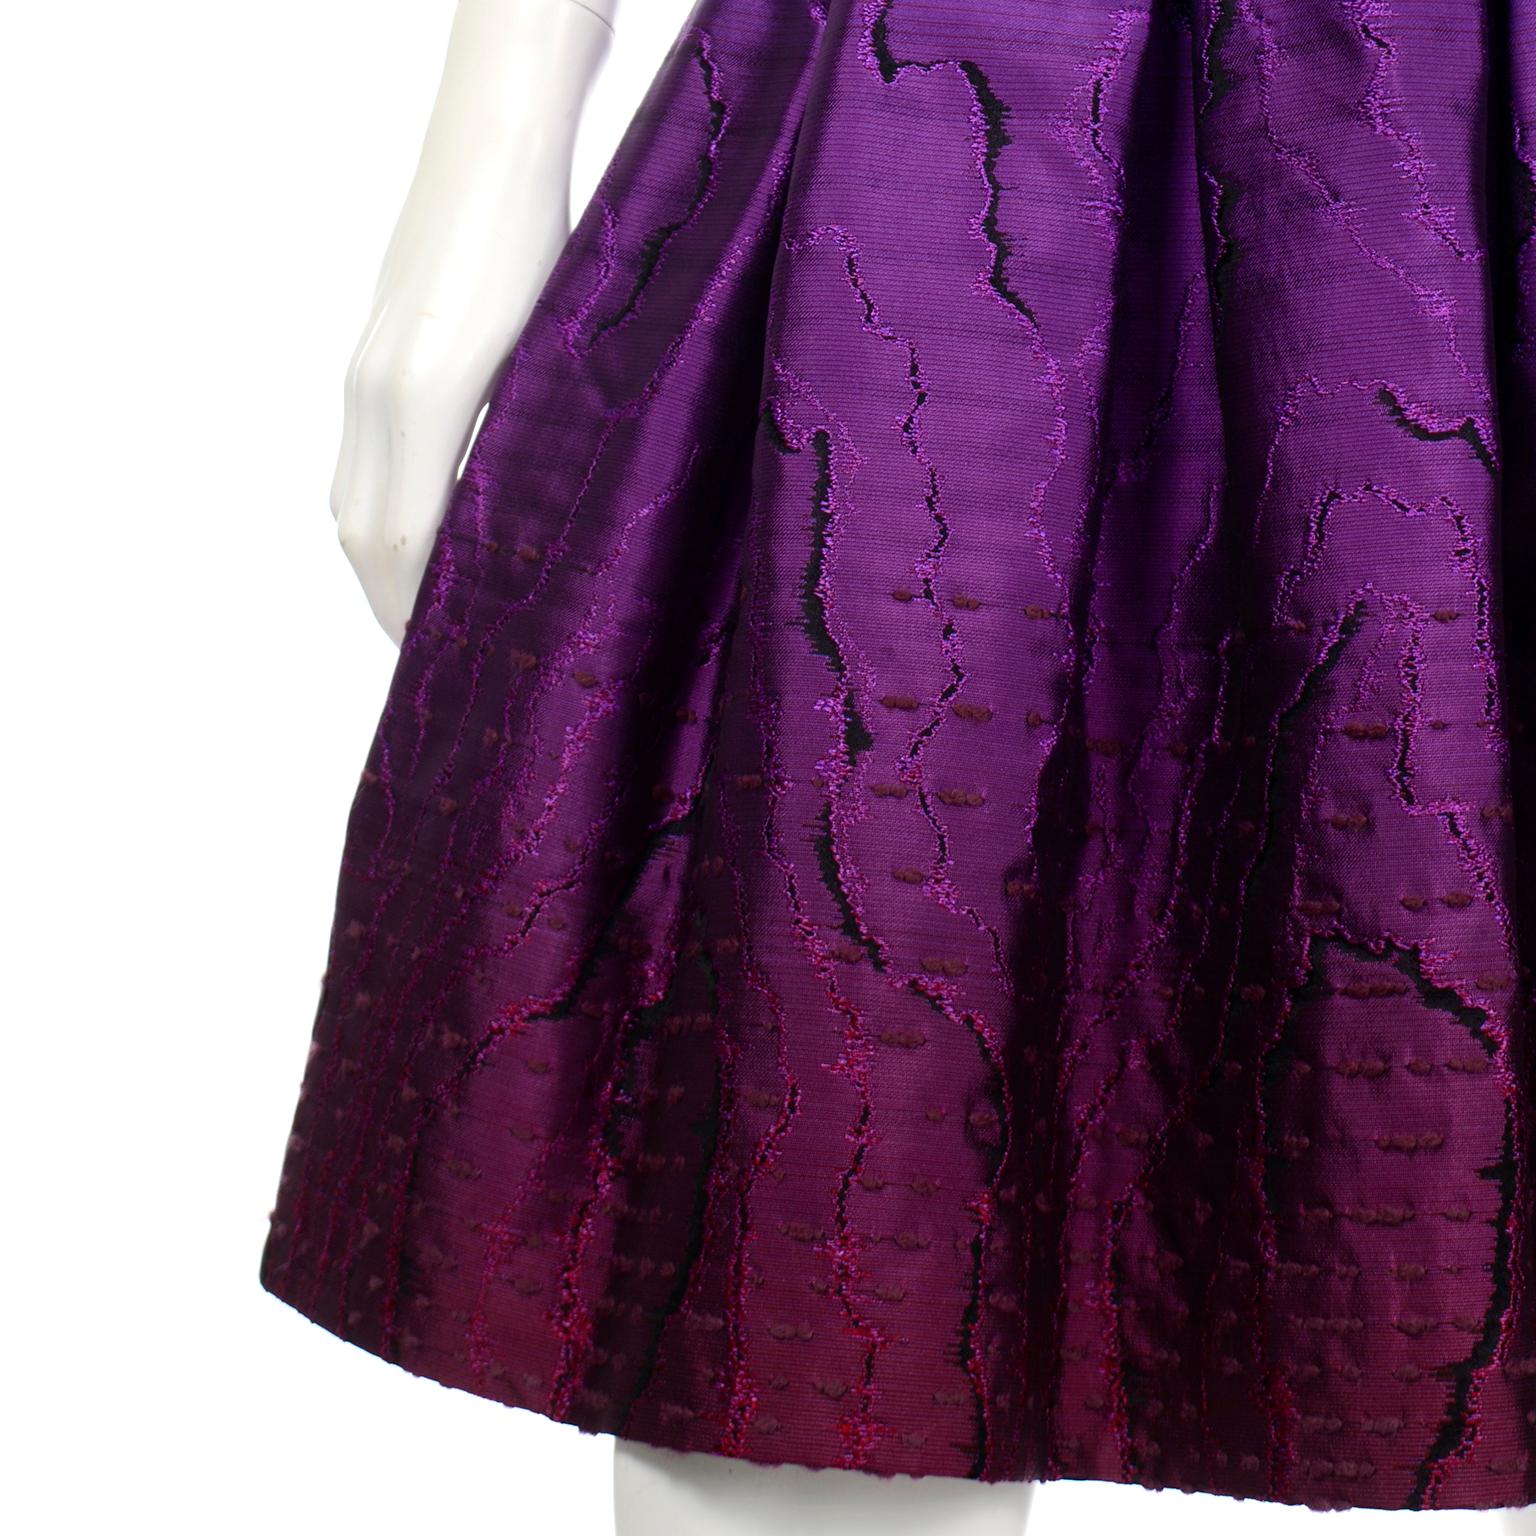 Oscar de la Renta Fall 2008 Purple Textured Skirt Runway Documented For Sale 3